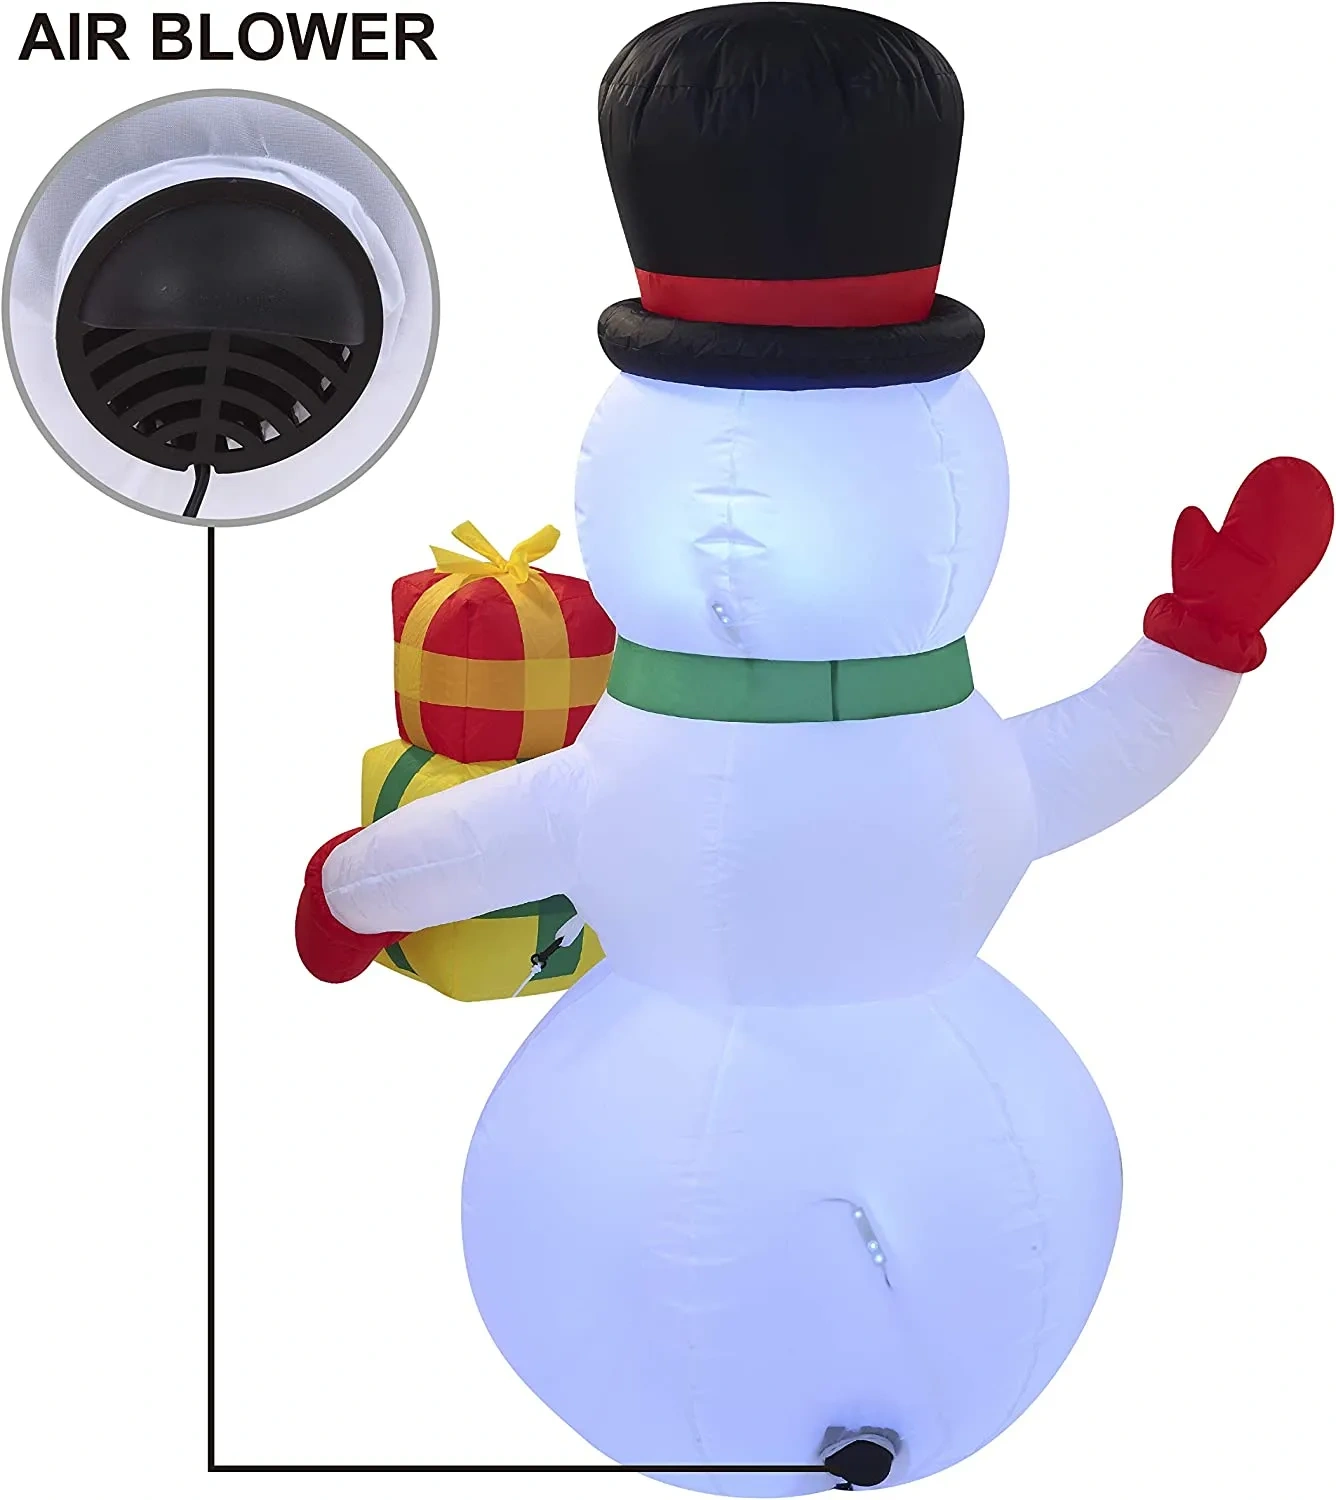 5ft LED Inflatable Snowman Christmas Decoration